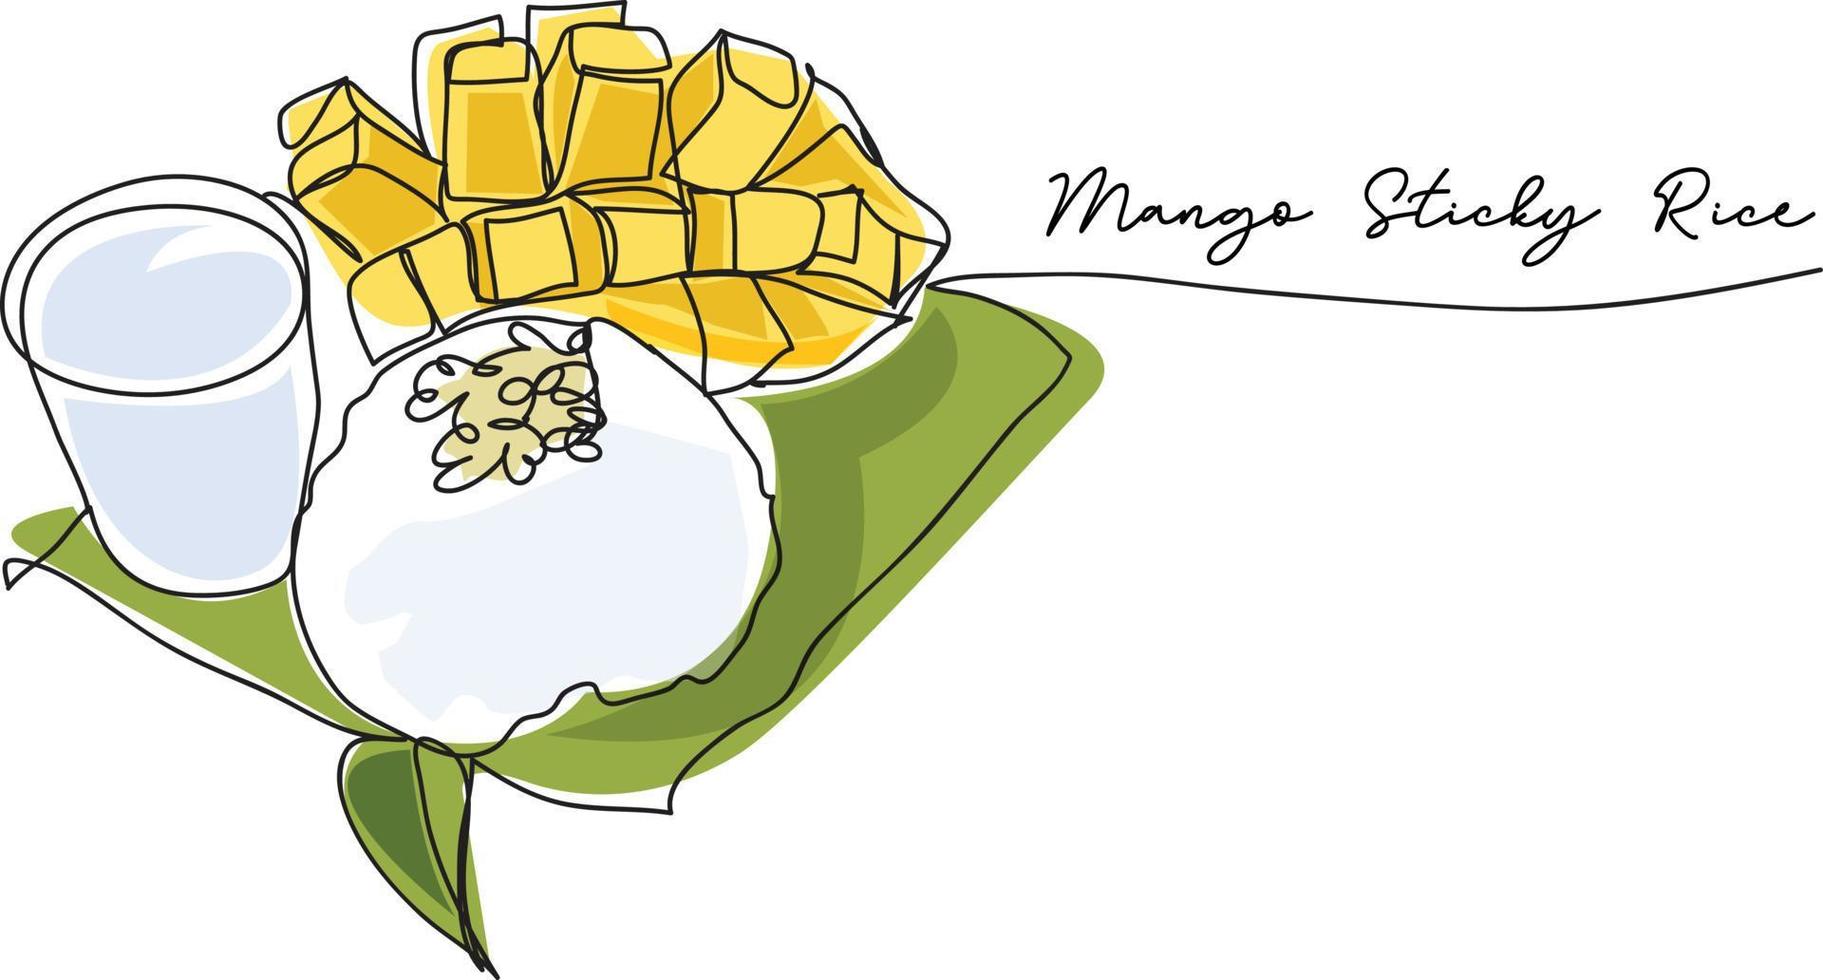 Mango sticky rice line drawing vector illustration.